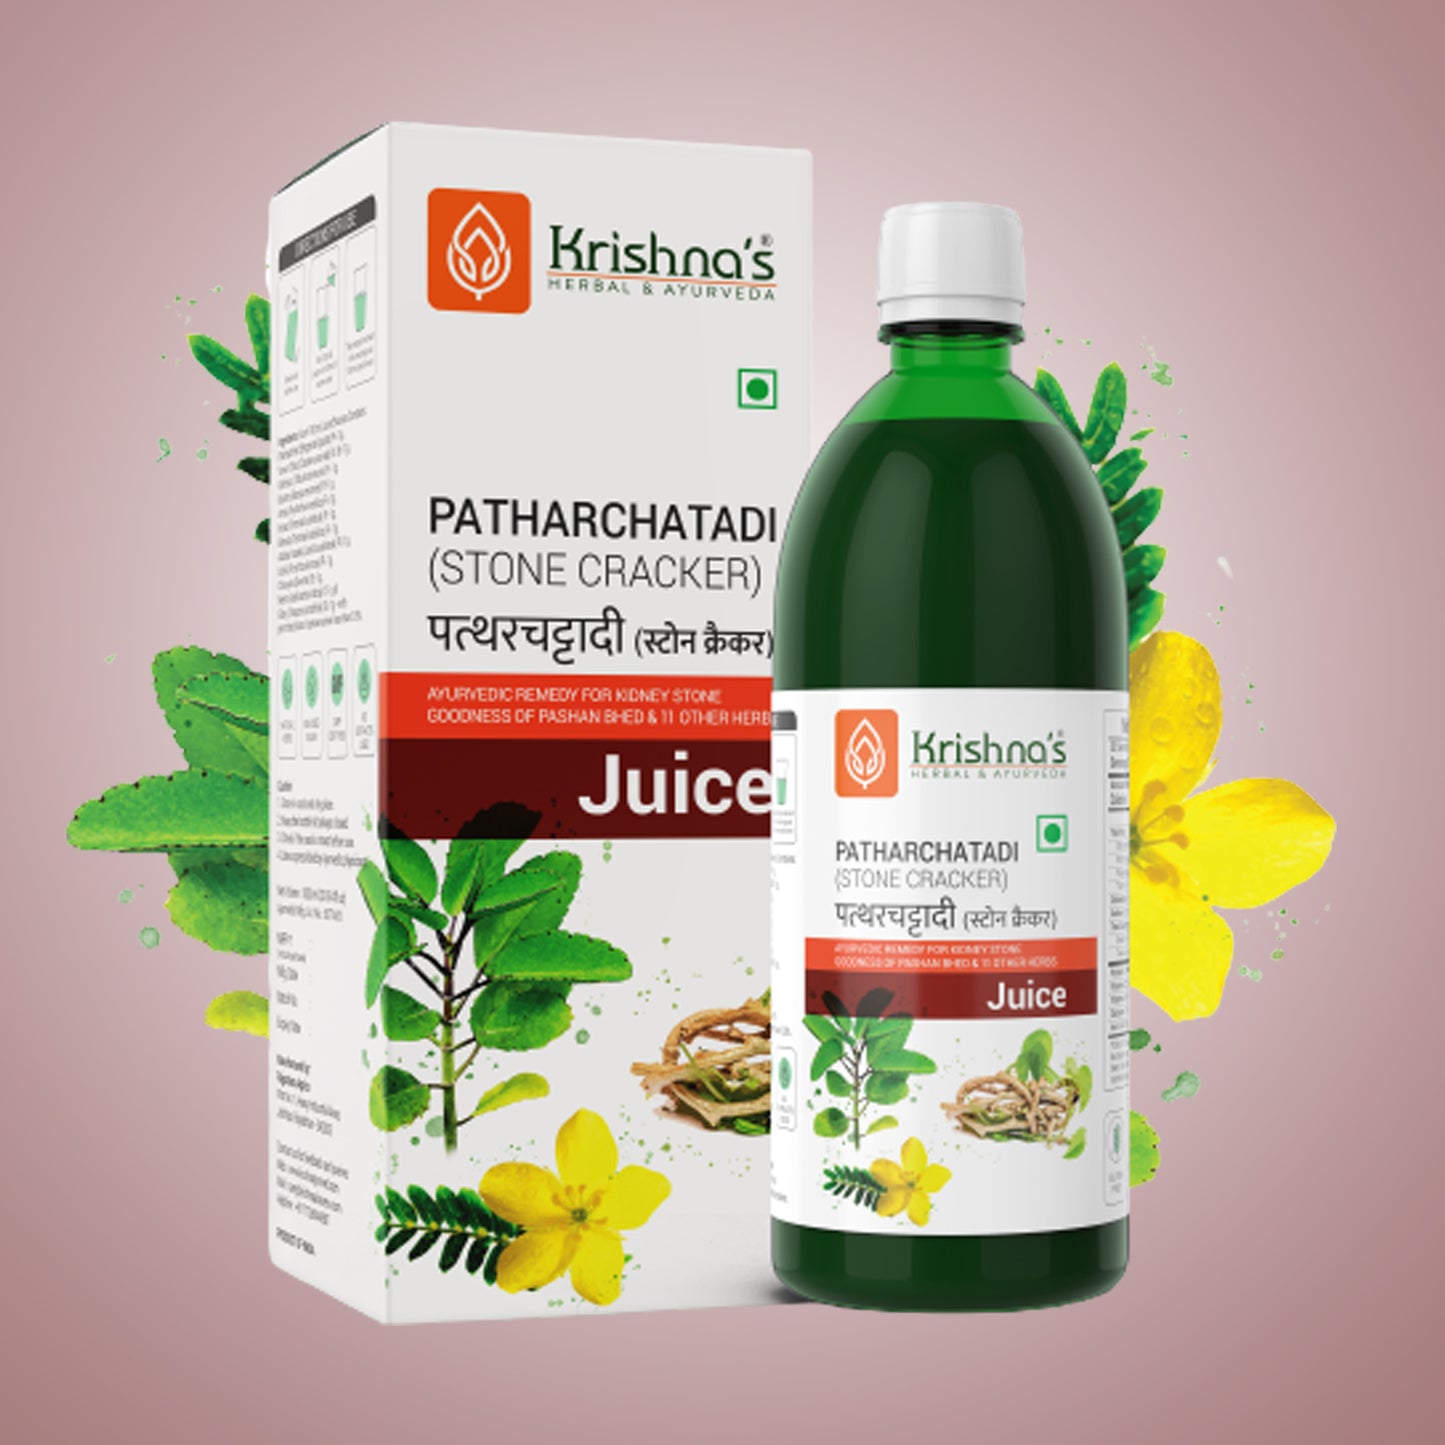 Krishna's Herbal & Ayurveda Patharchatadi (Stone Craker) Juice 1000ml